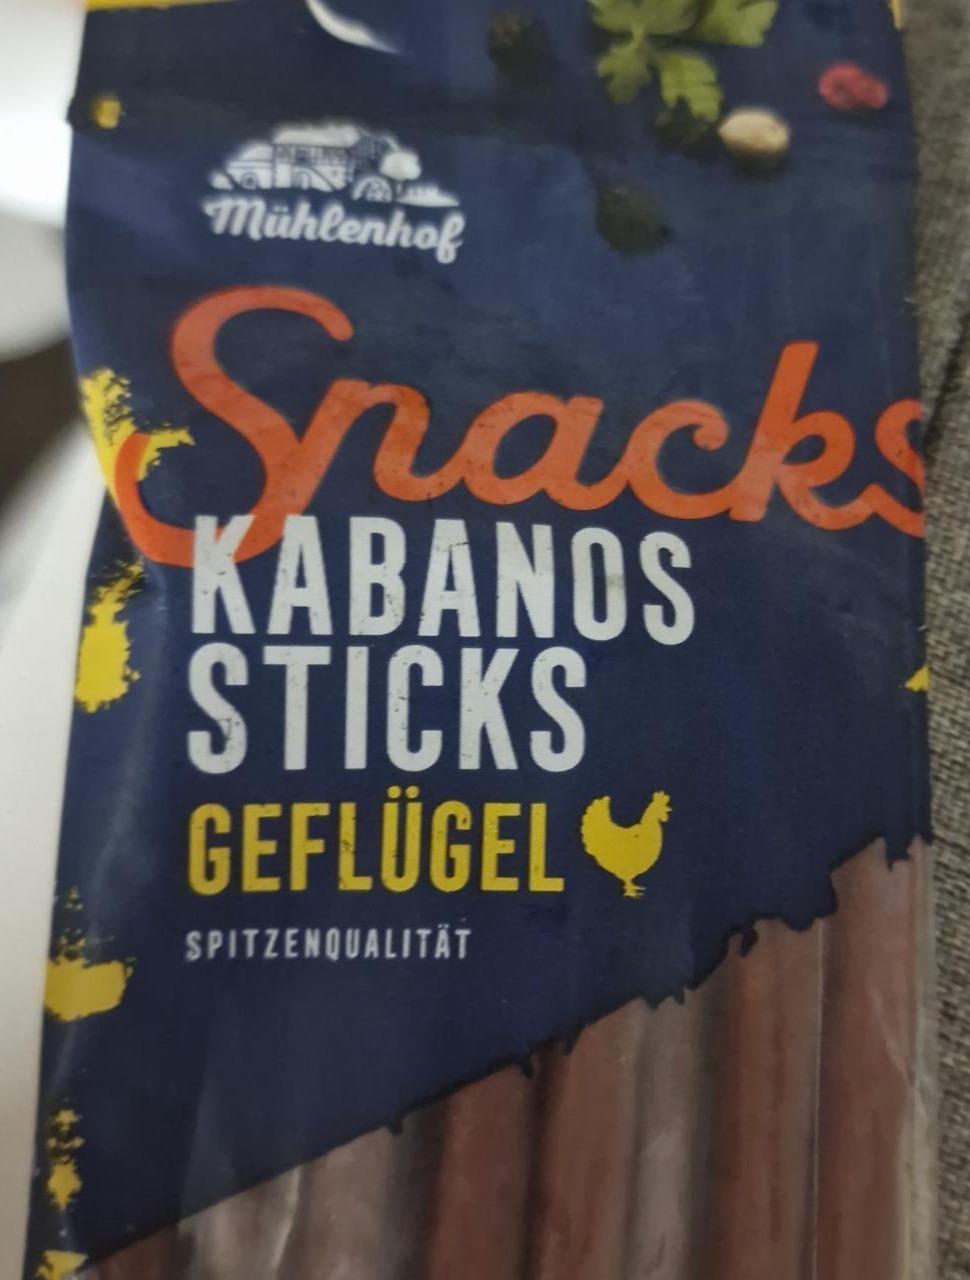 Fotografie - Snacks Kabanos sticks geflügel Mühlenhof